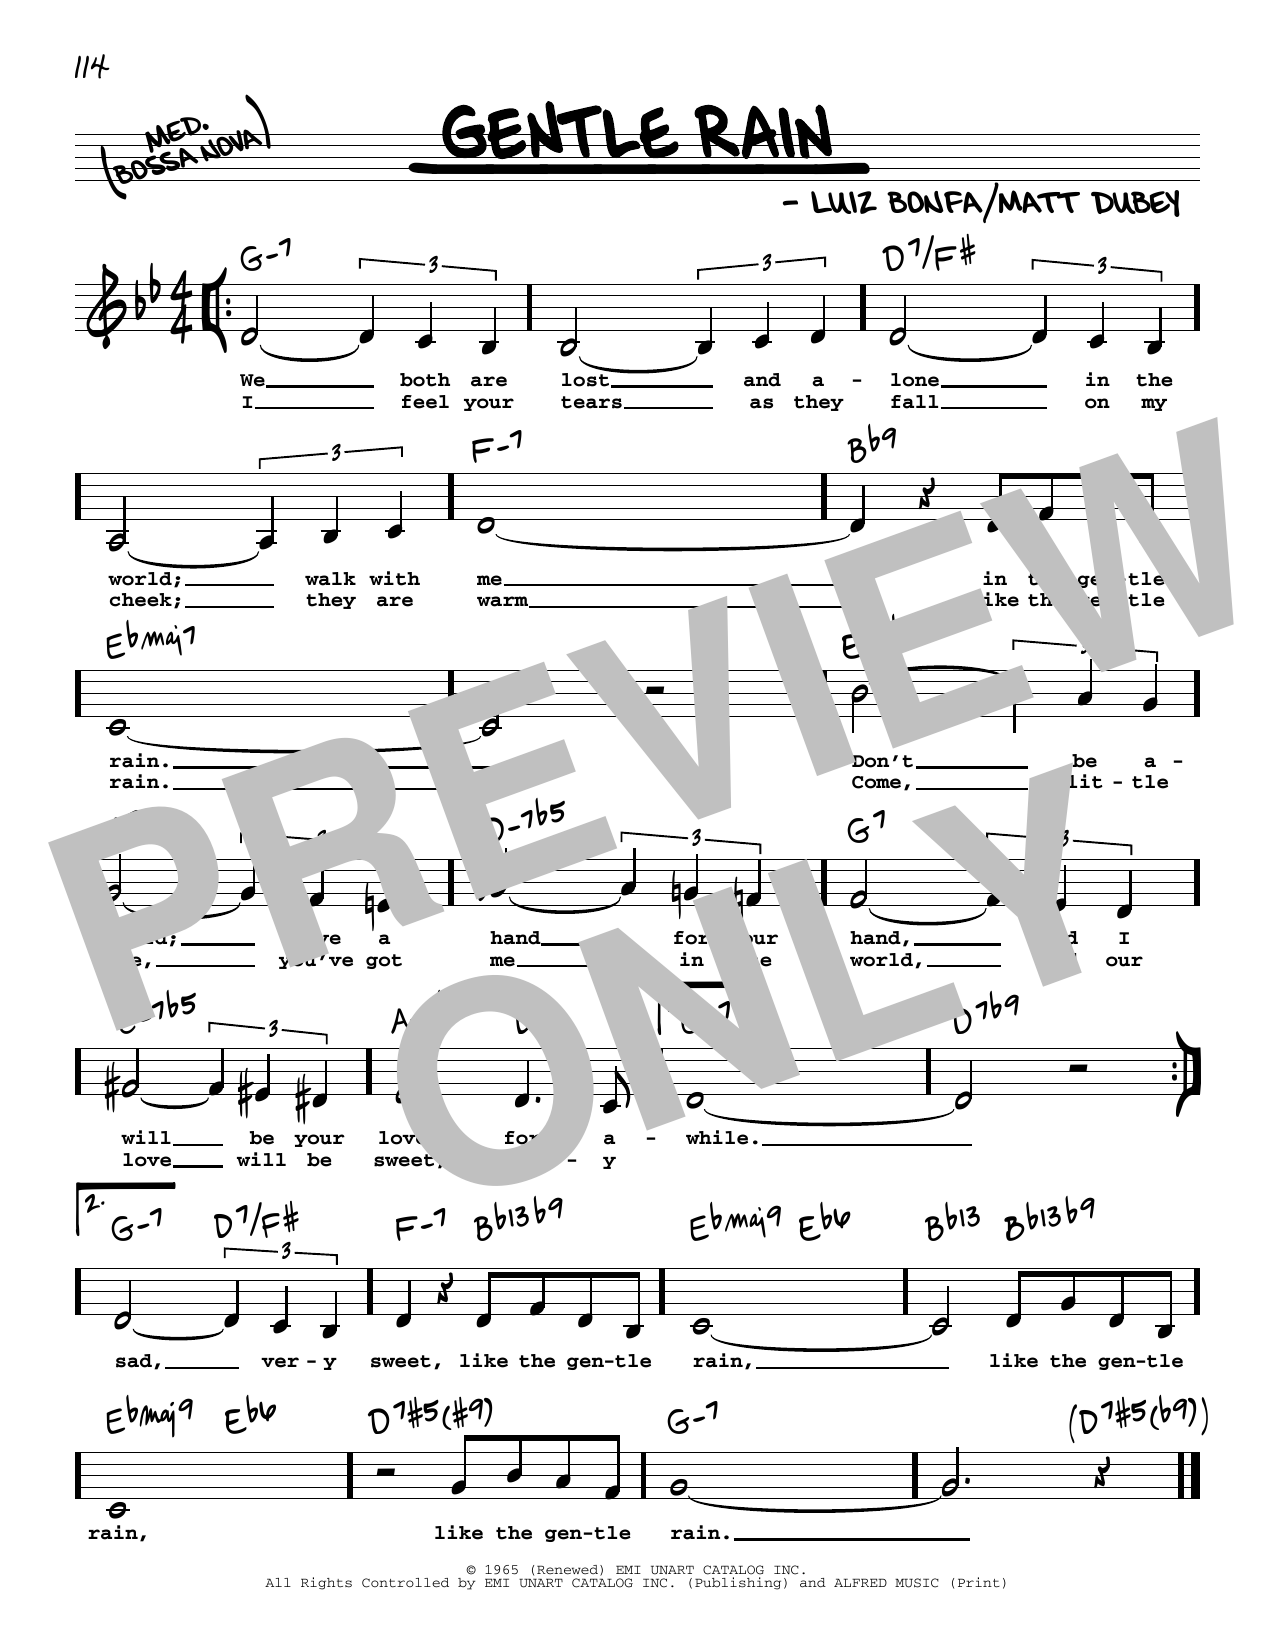 Luiz Bonfa Gentle Rain (Low Voice) Sheet Music Notes & Chords for Real Book – Melody, Lyrics & Chords - Download or Print PDF